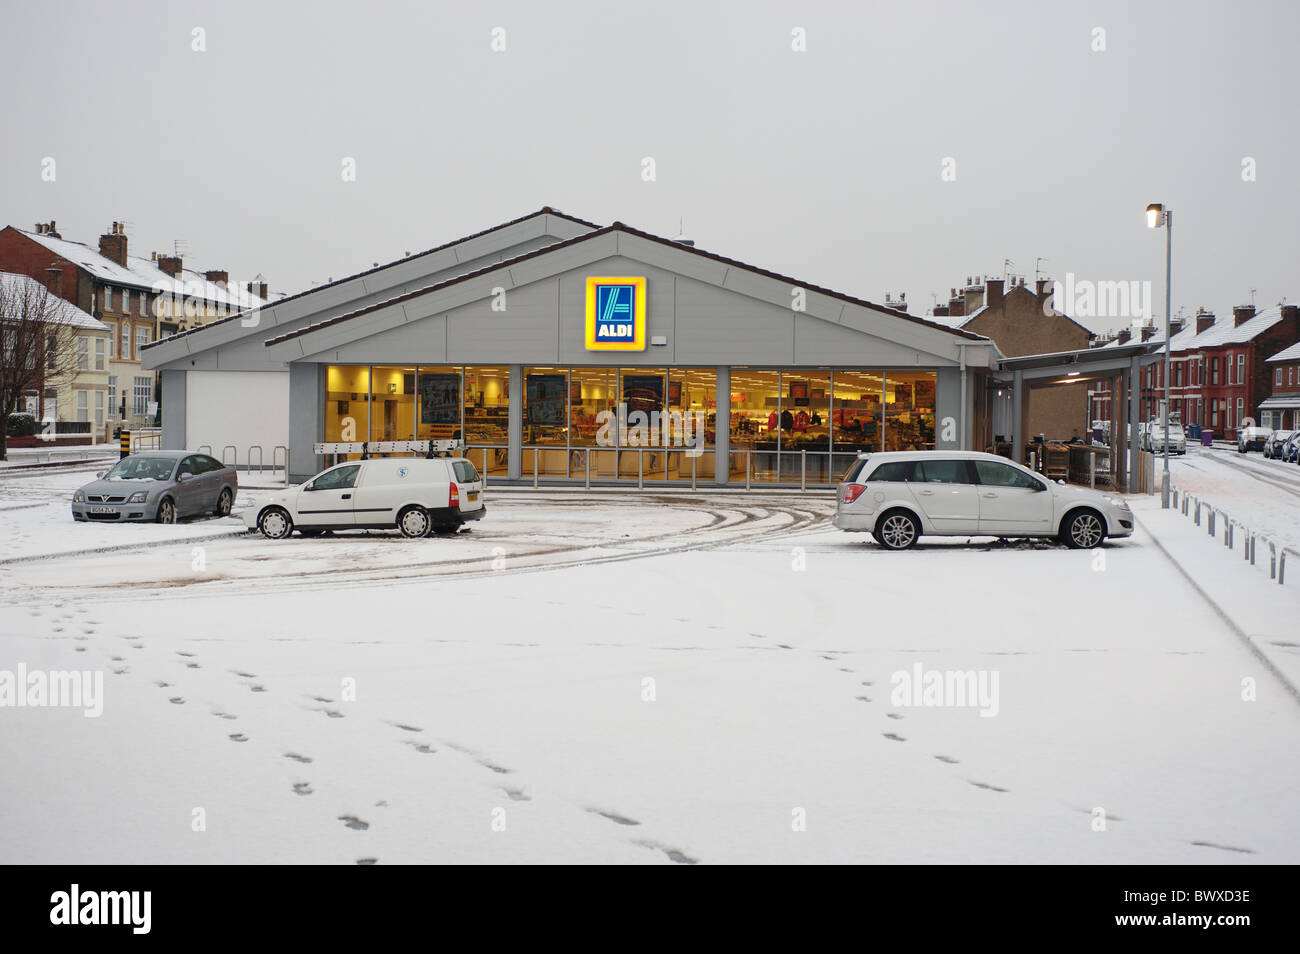 Aldi Winter Fotos e Imágenes de stock - Alamy